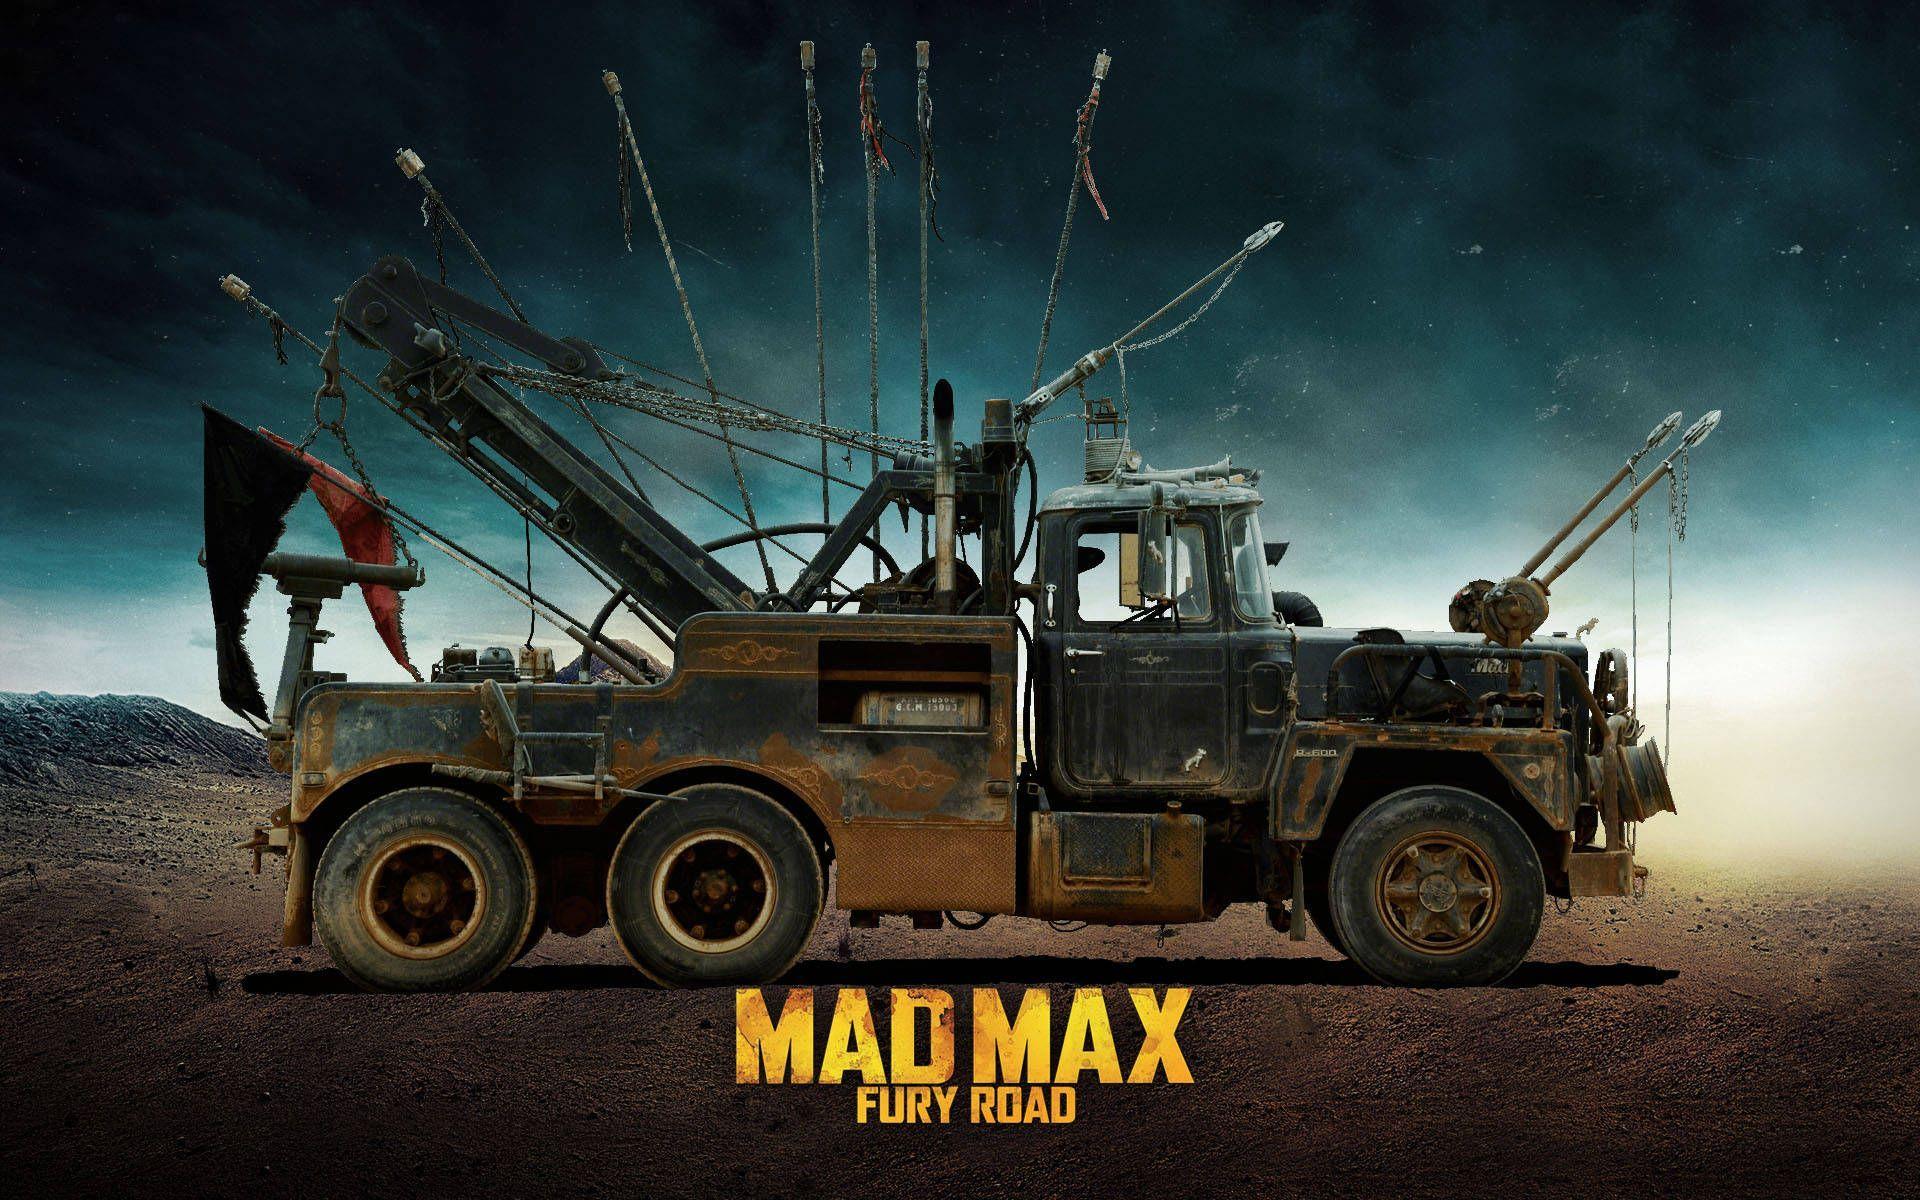 Mack Mad Max Fury Road Cars 2015 Movie HD Quality Wallpaper